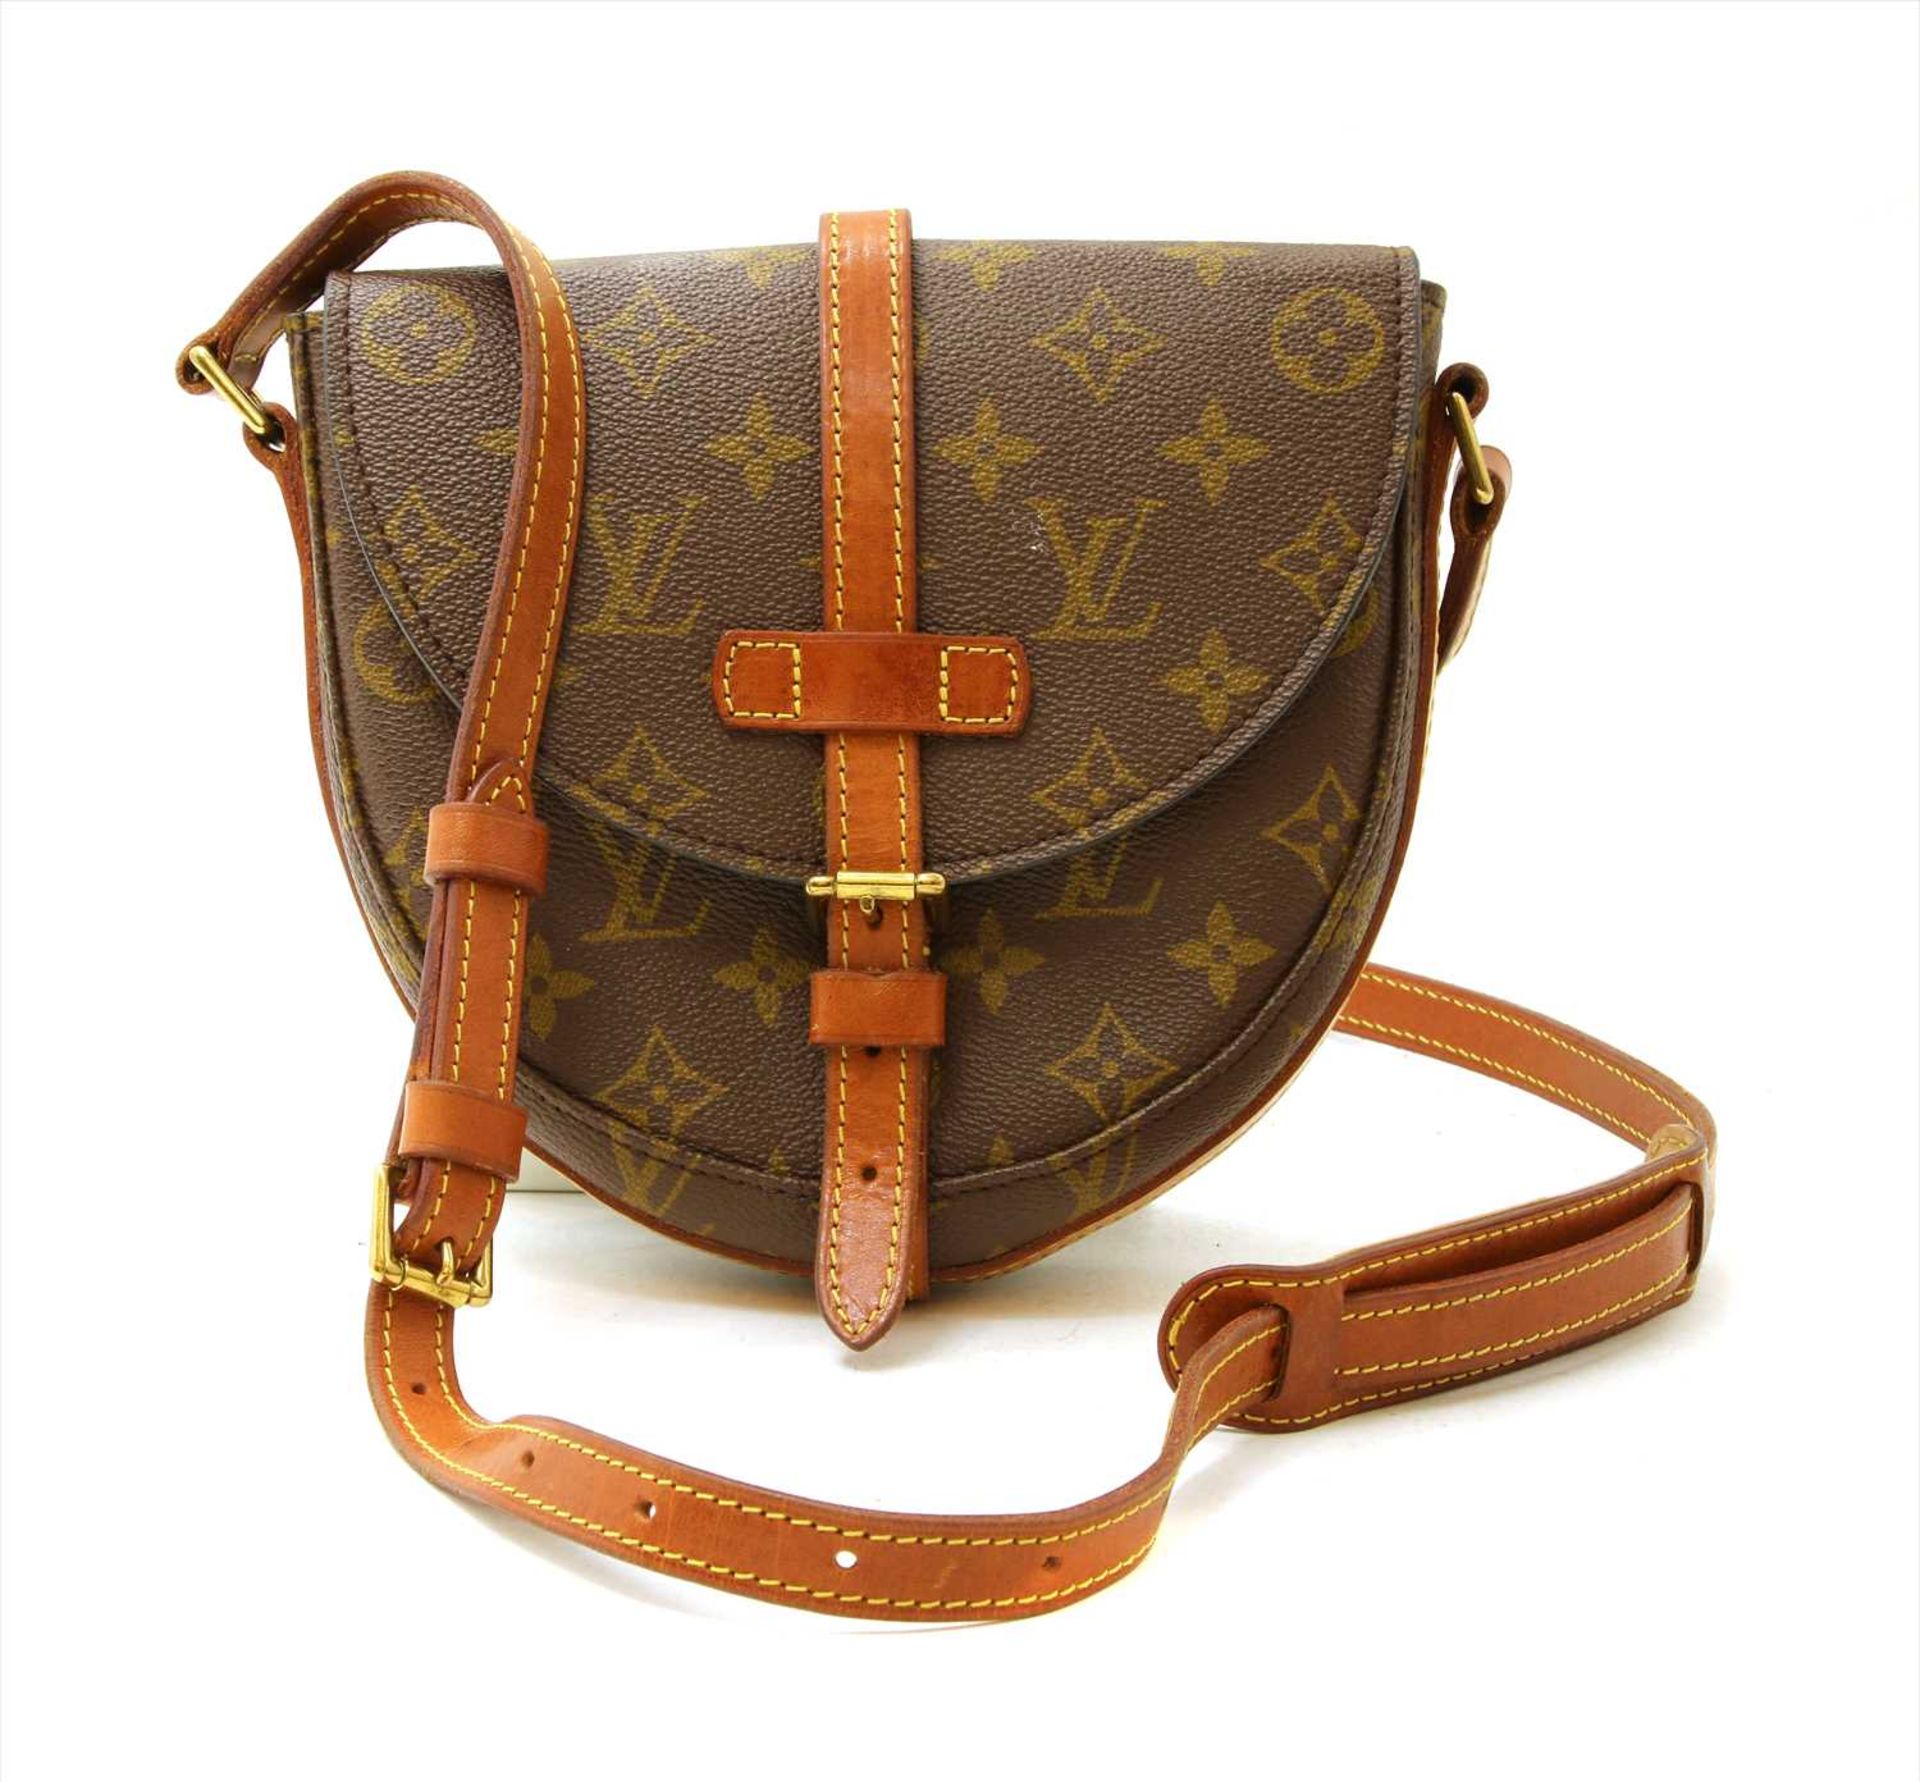 A Louis Vuitton cross body satchel bag